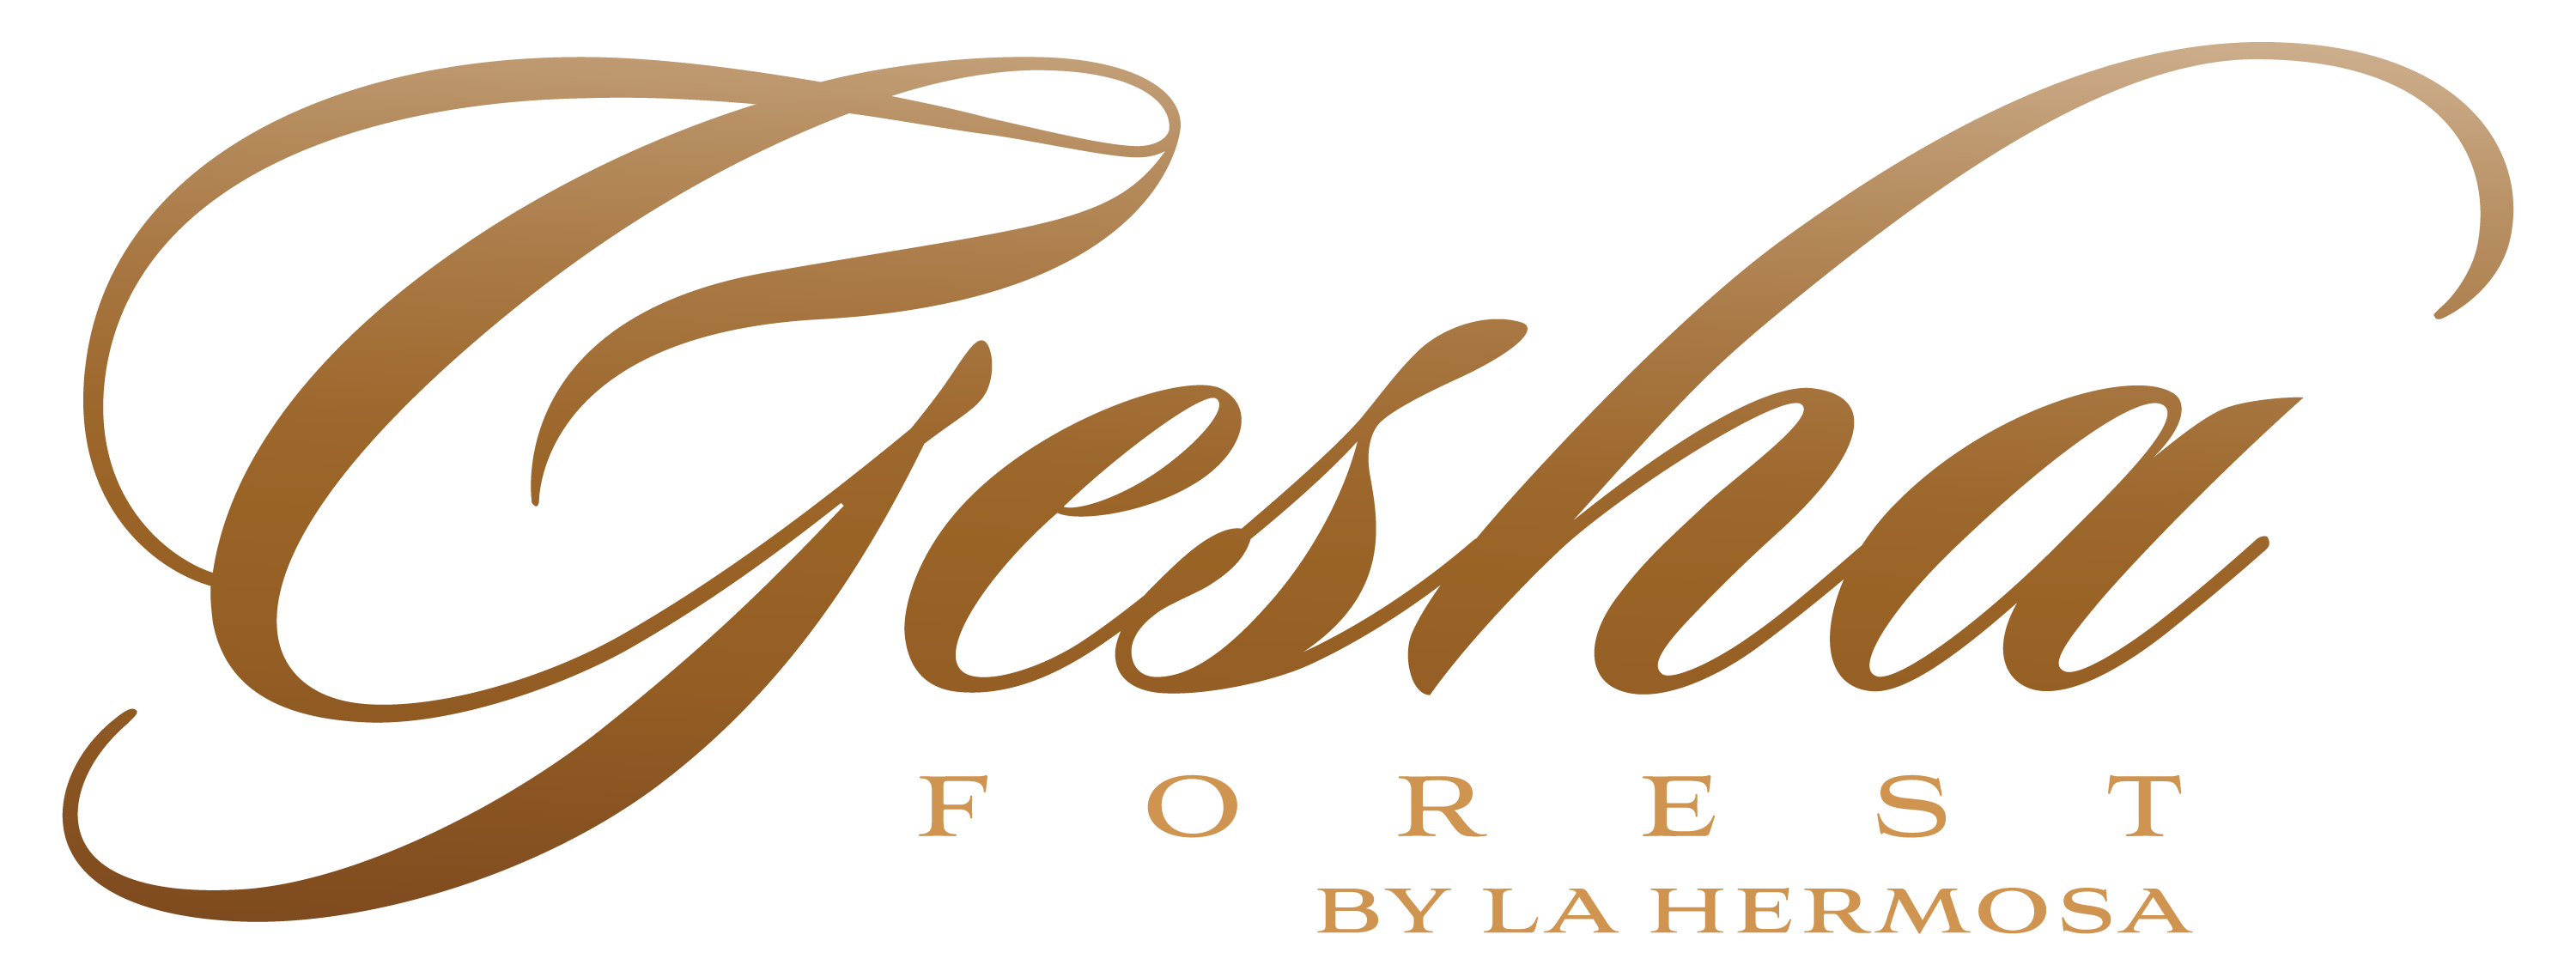 cropped-Gesha-Forest_Logo-01.png